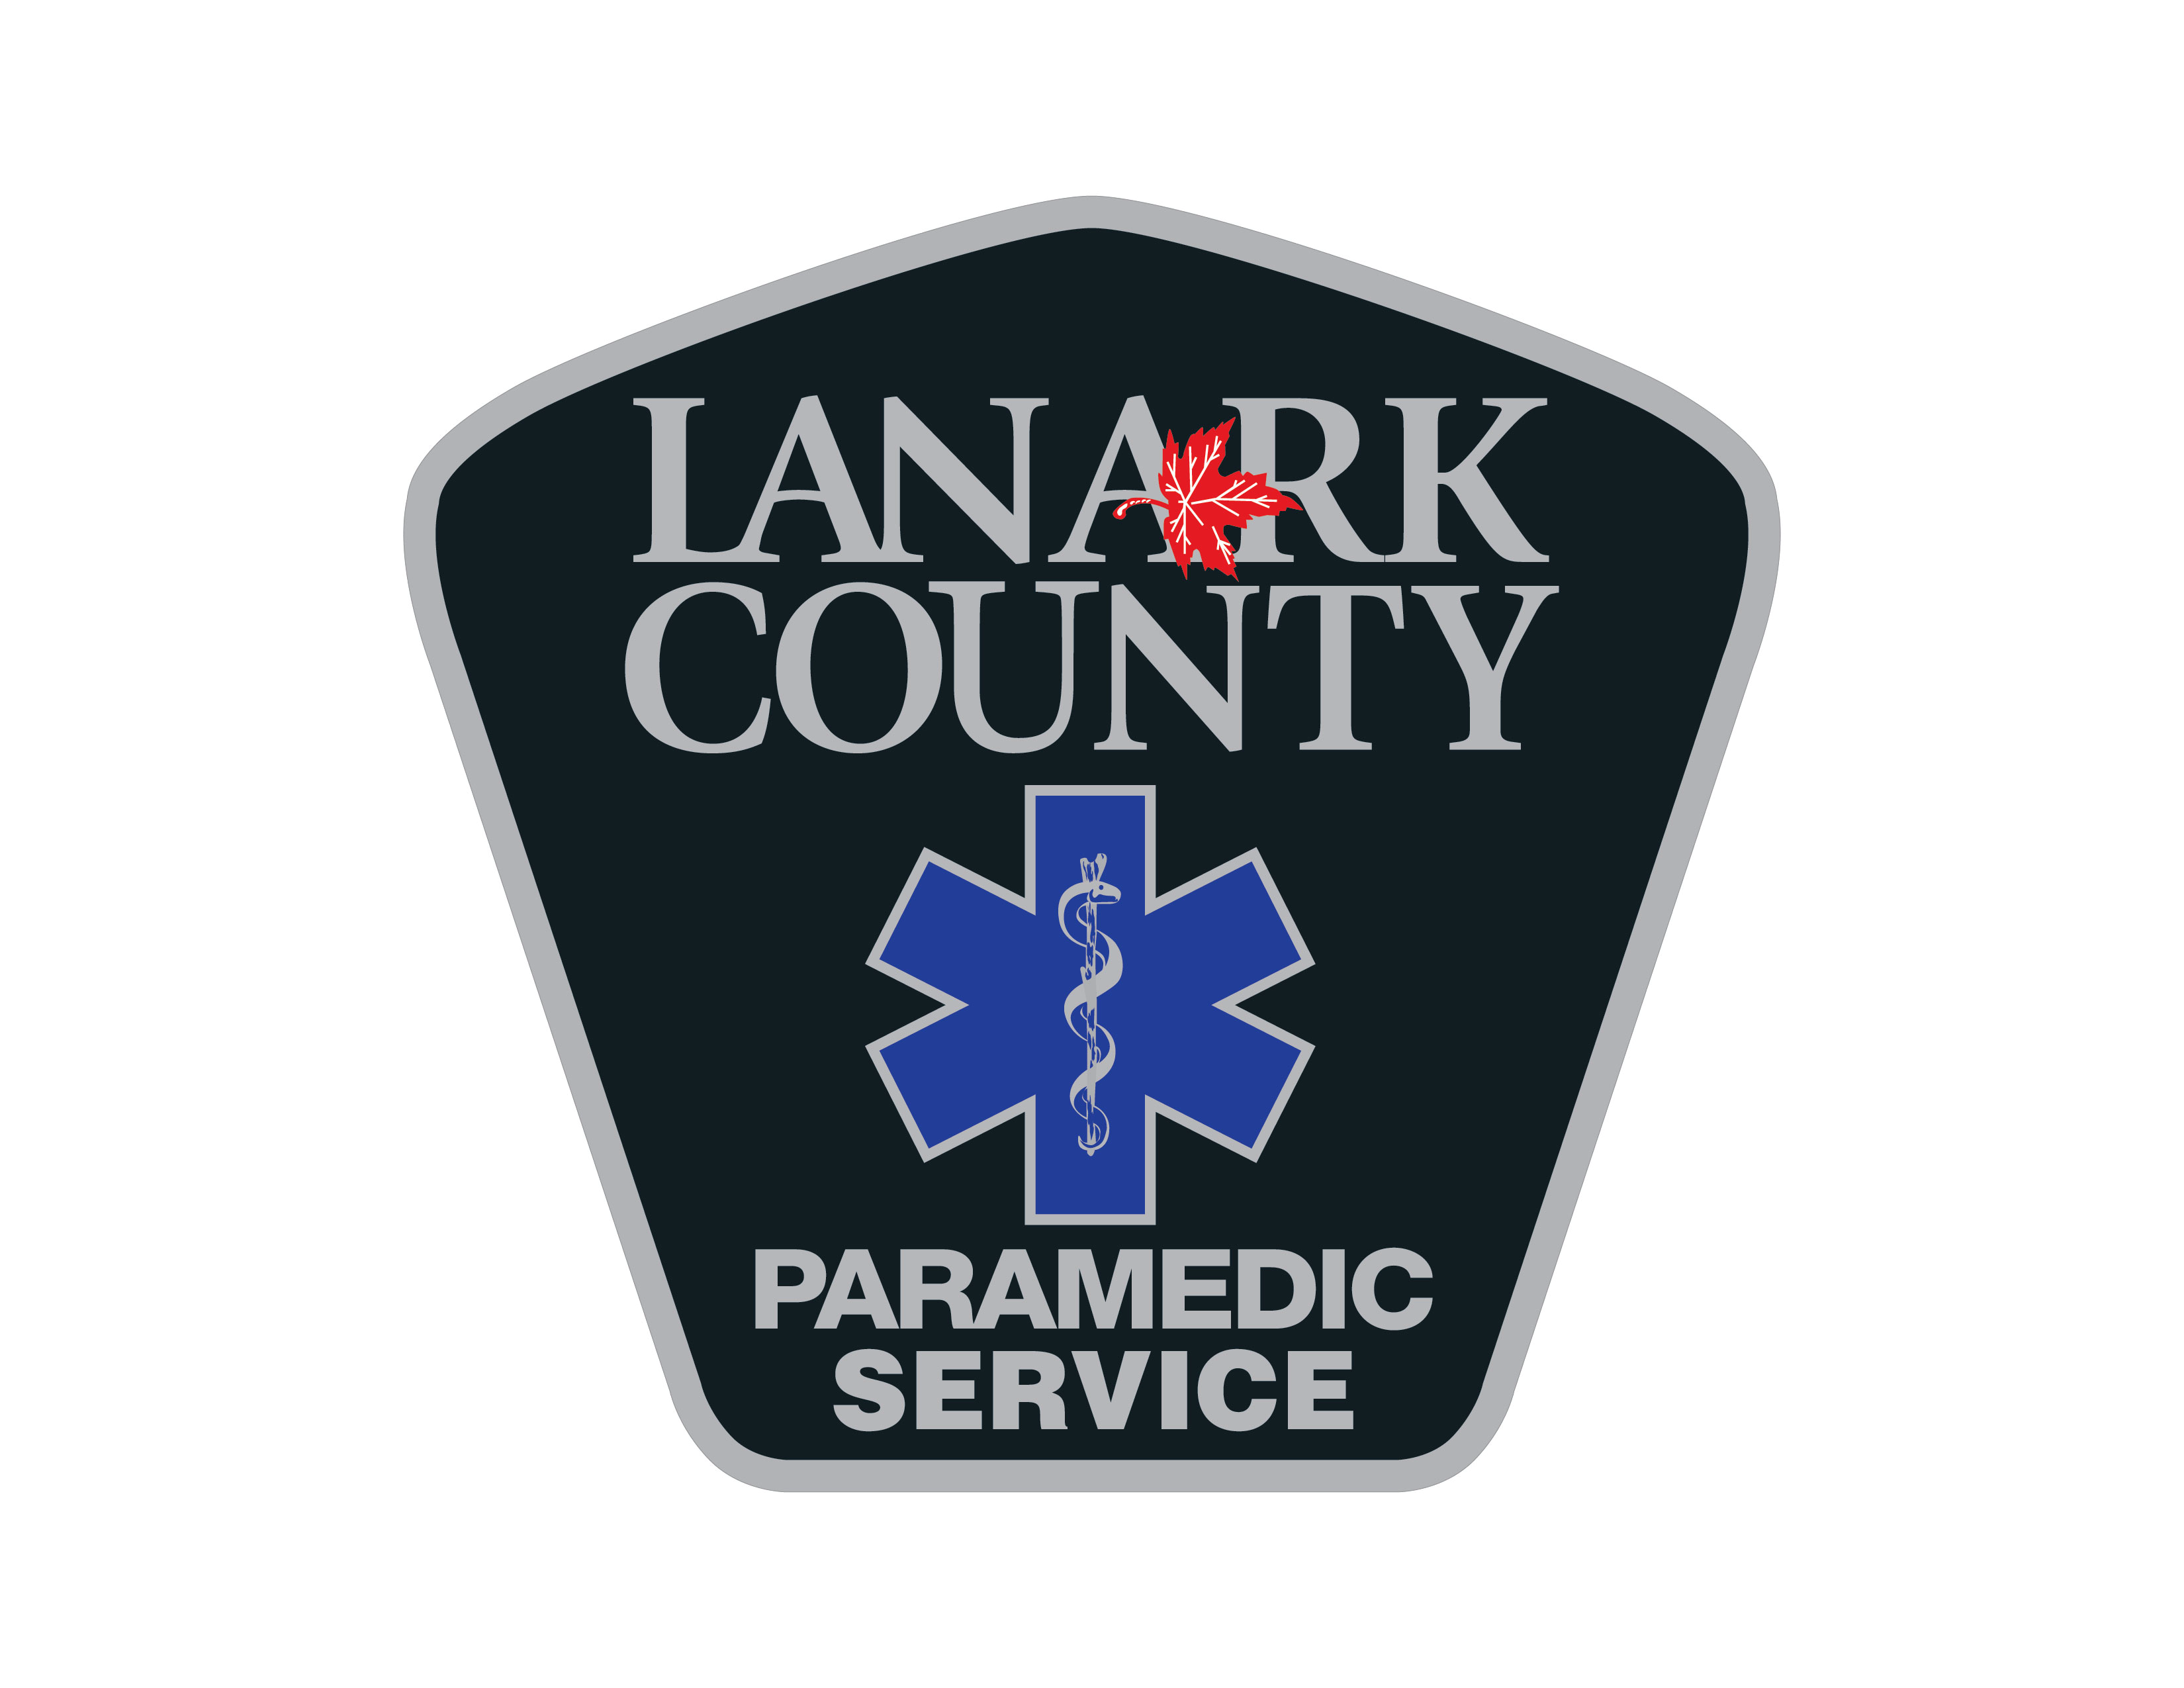 Lanark County Paramedic Service E-Learning Site